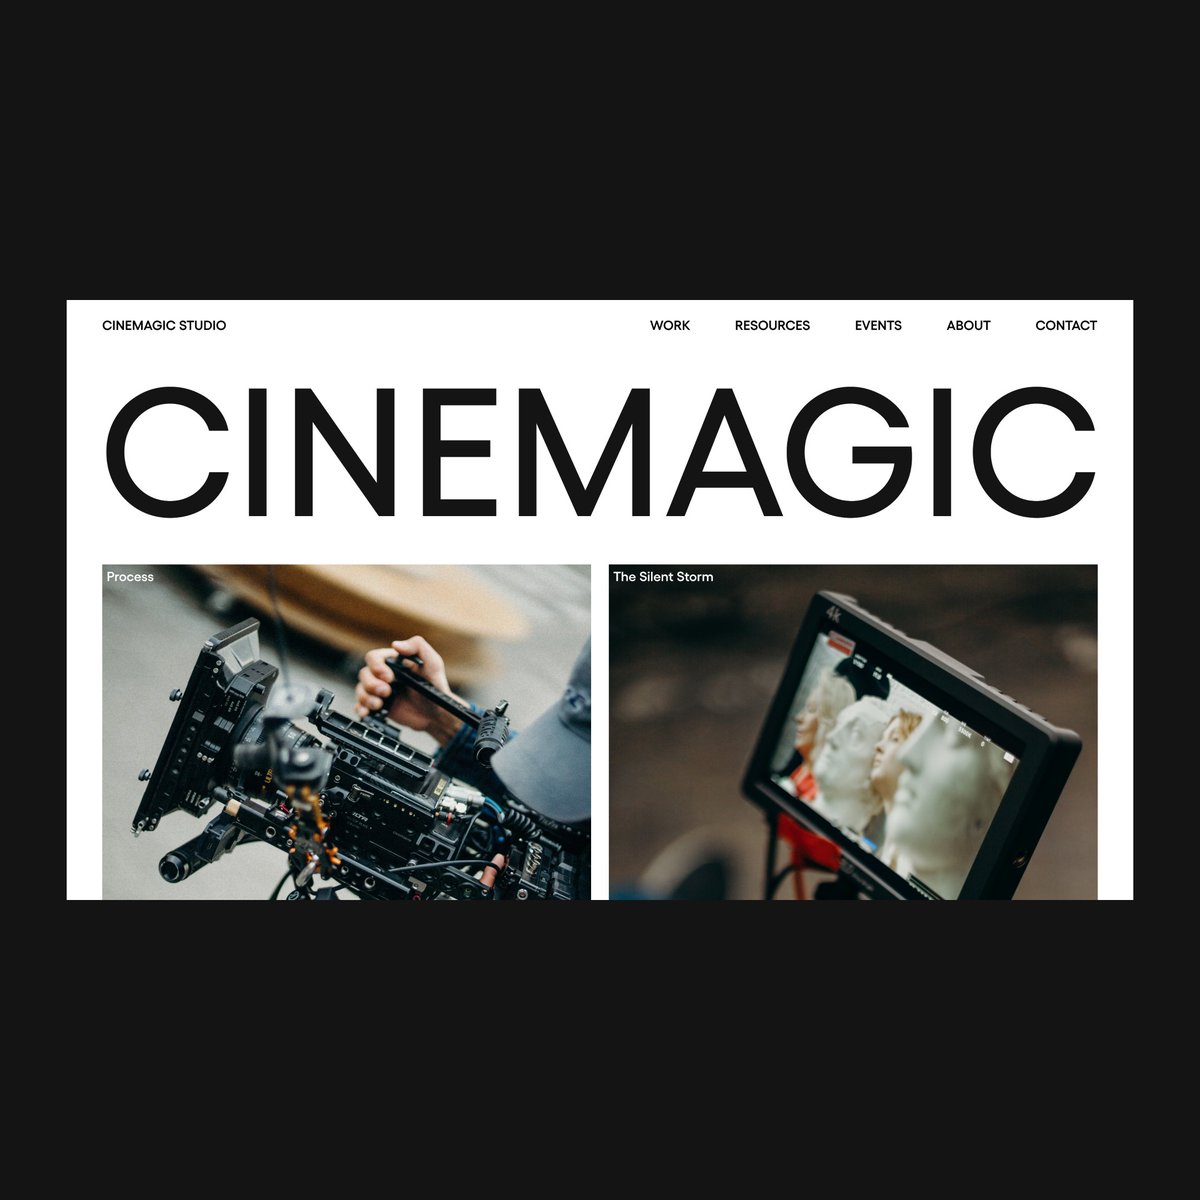 Cinemagic Studio 

instagram.com/niveshbirangal/
behance.net/niveshbirangal
dribbble.com/niveshbirangal

#ui #ux #uiux #figma #uxdesign #uidesign #design #behance #dribbble #adobexd #mobile #mobiledesign #web #frontend #typography #grid #grids #layout #dailyui #webdesign #creative